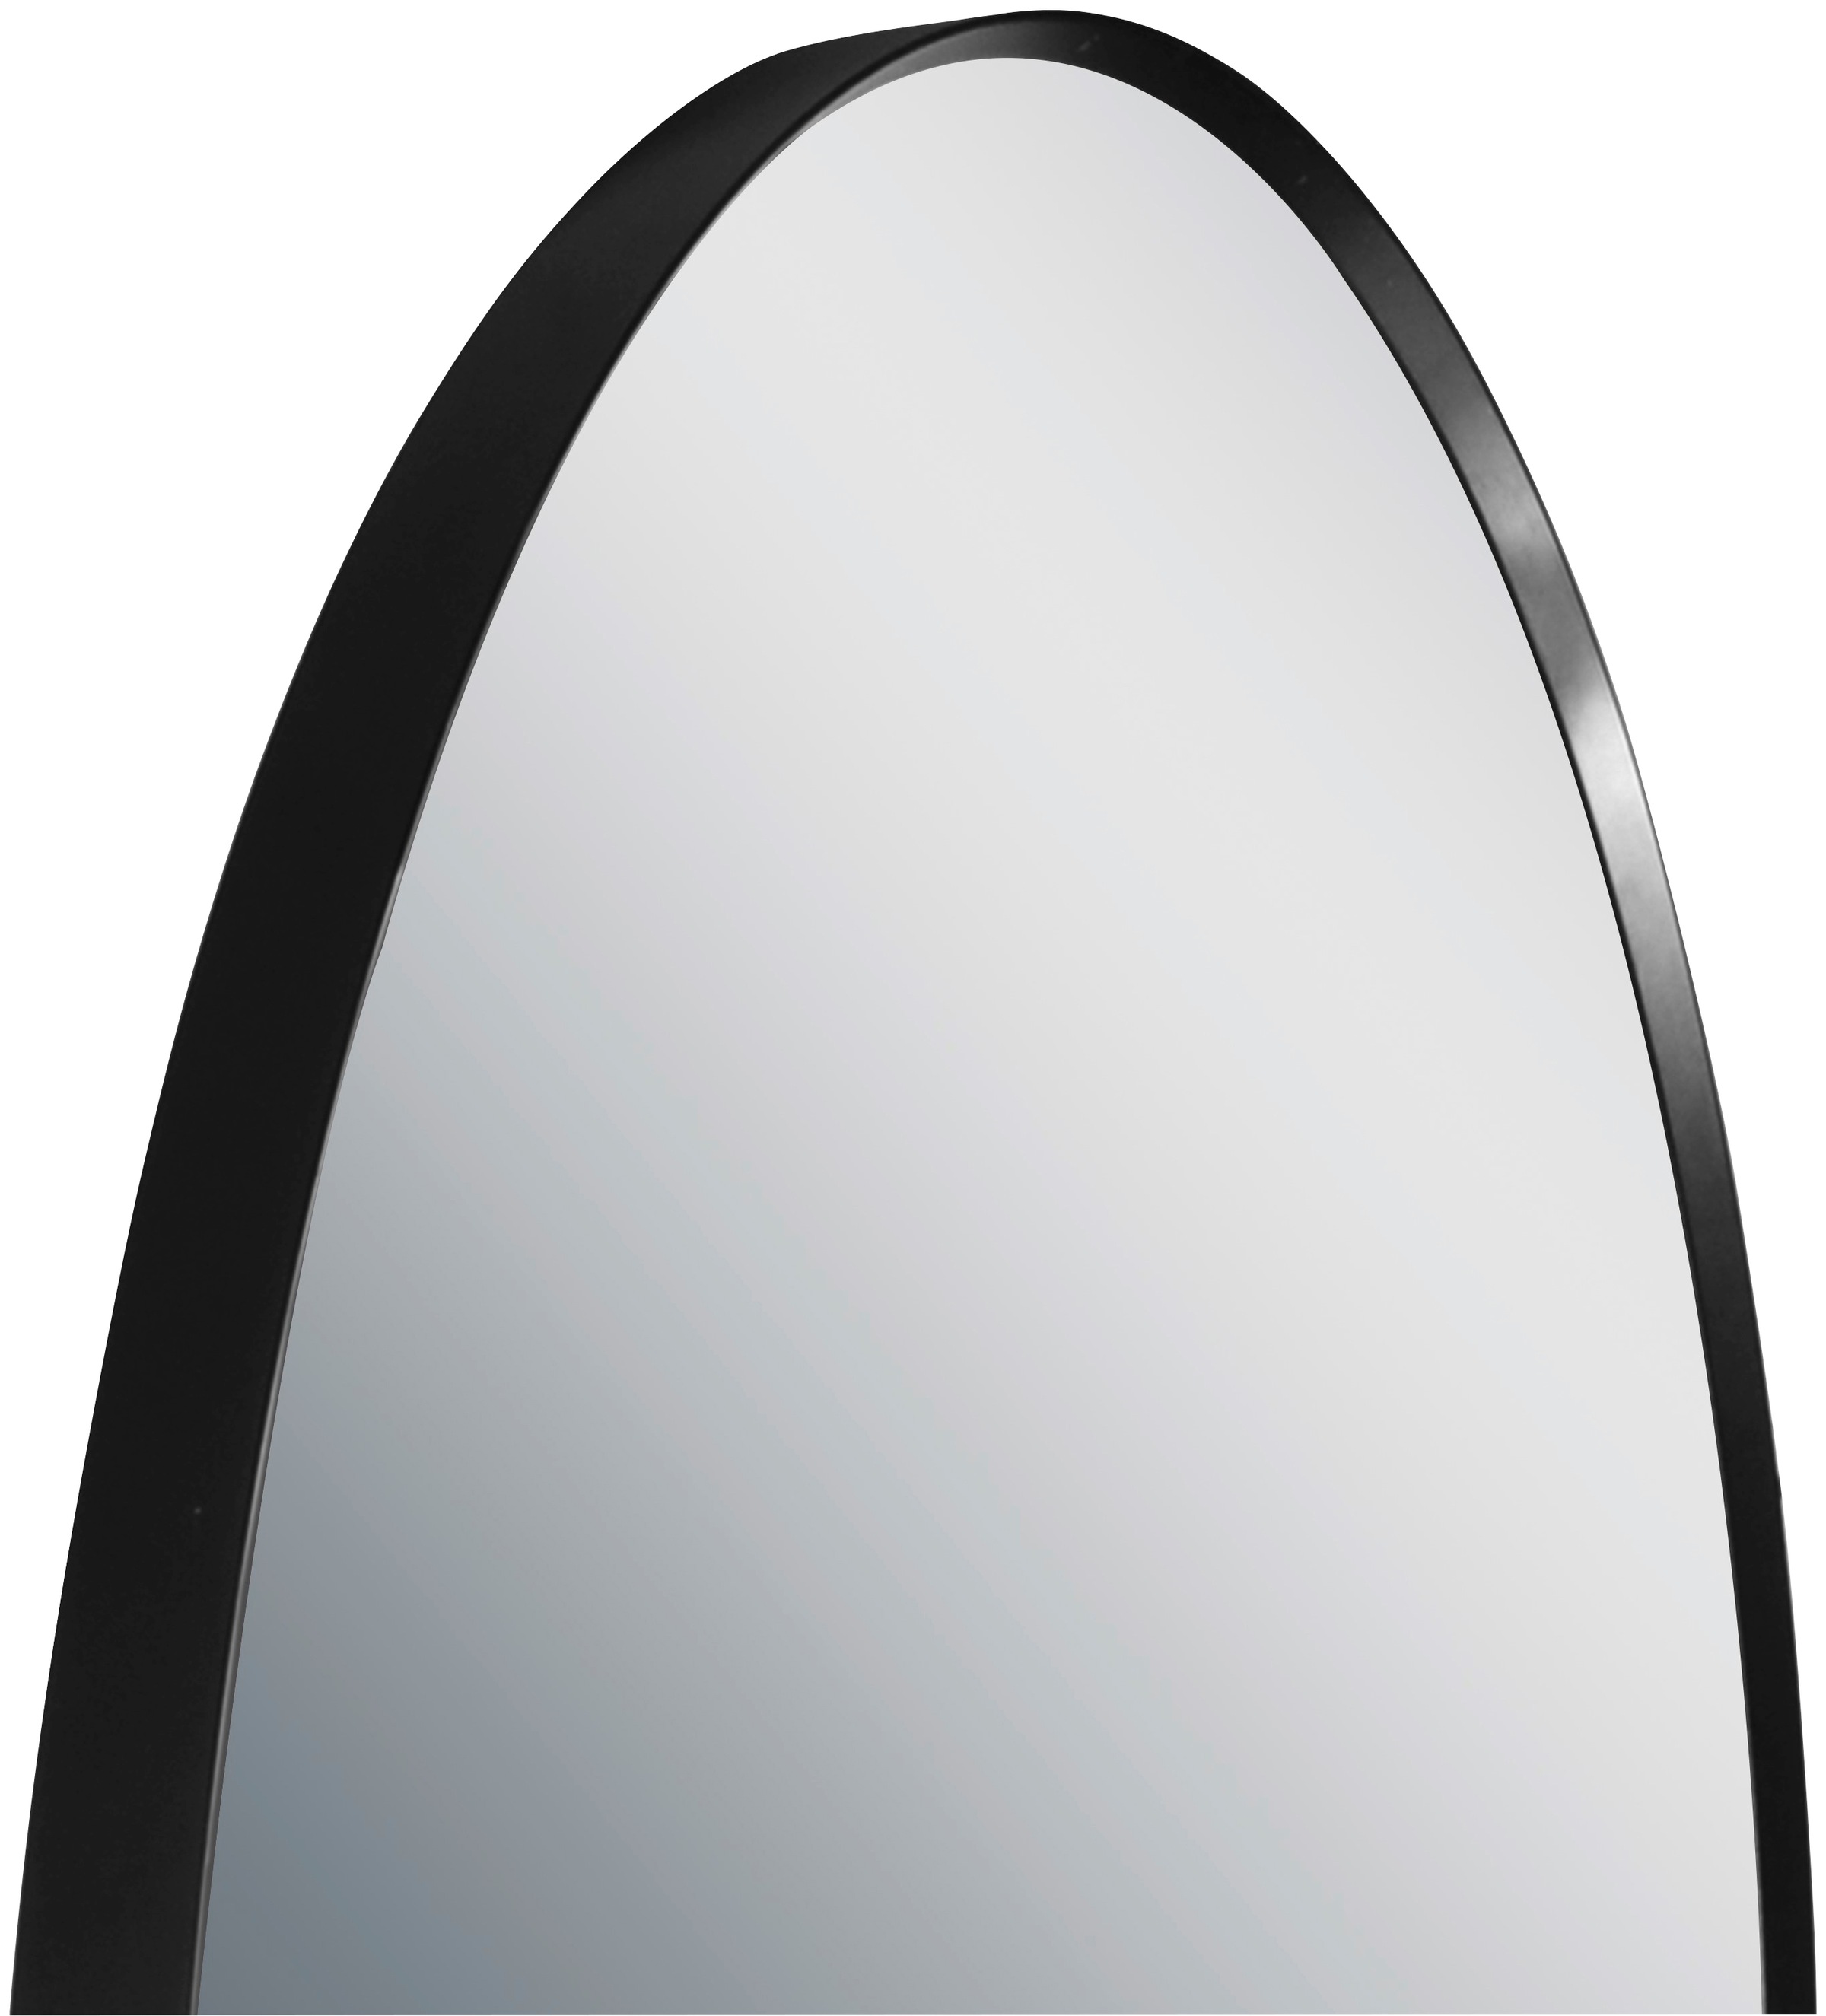 Talos Badspiegel »Black Circle«, (Komplett-Set), Durchmesser: 60 cm